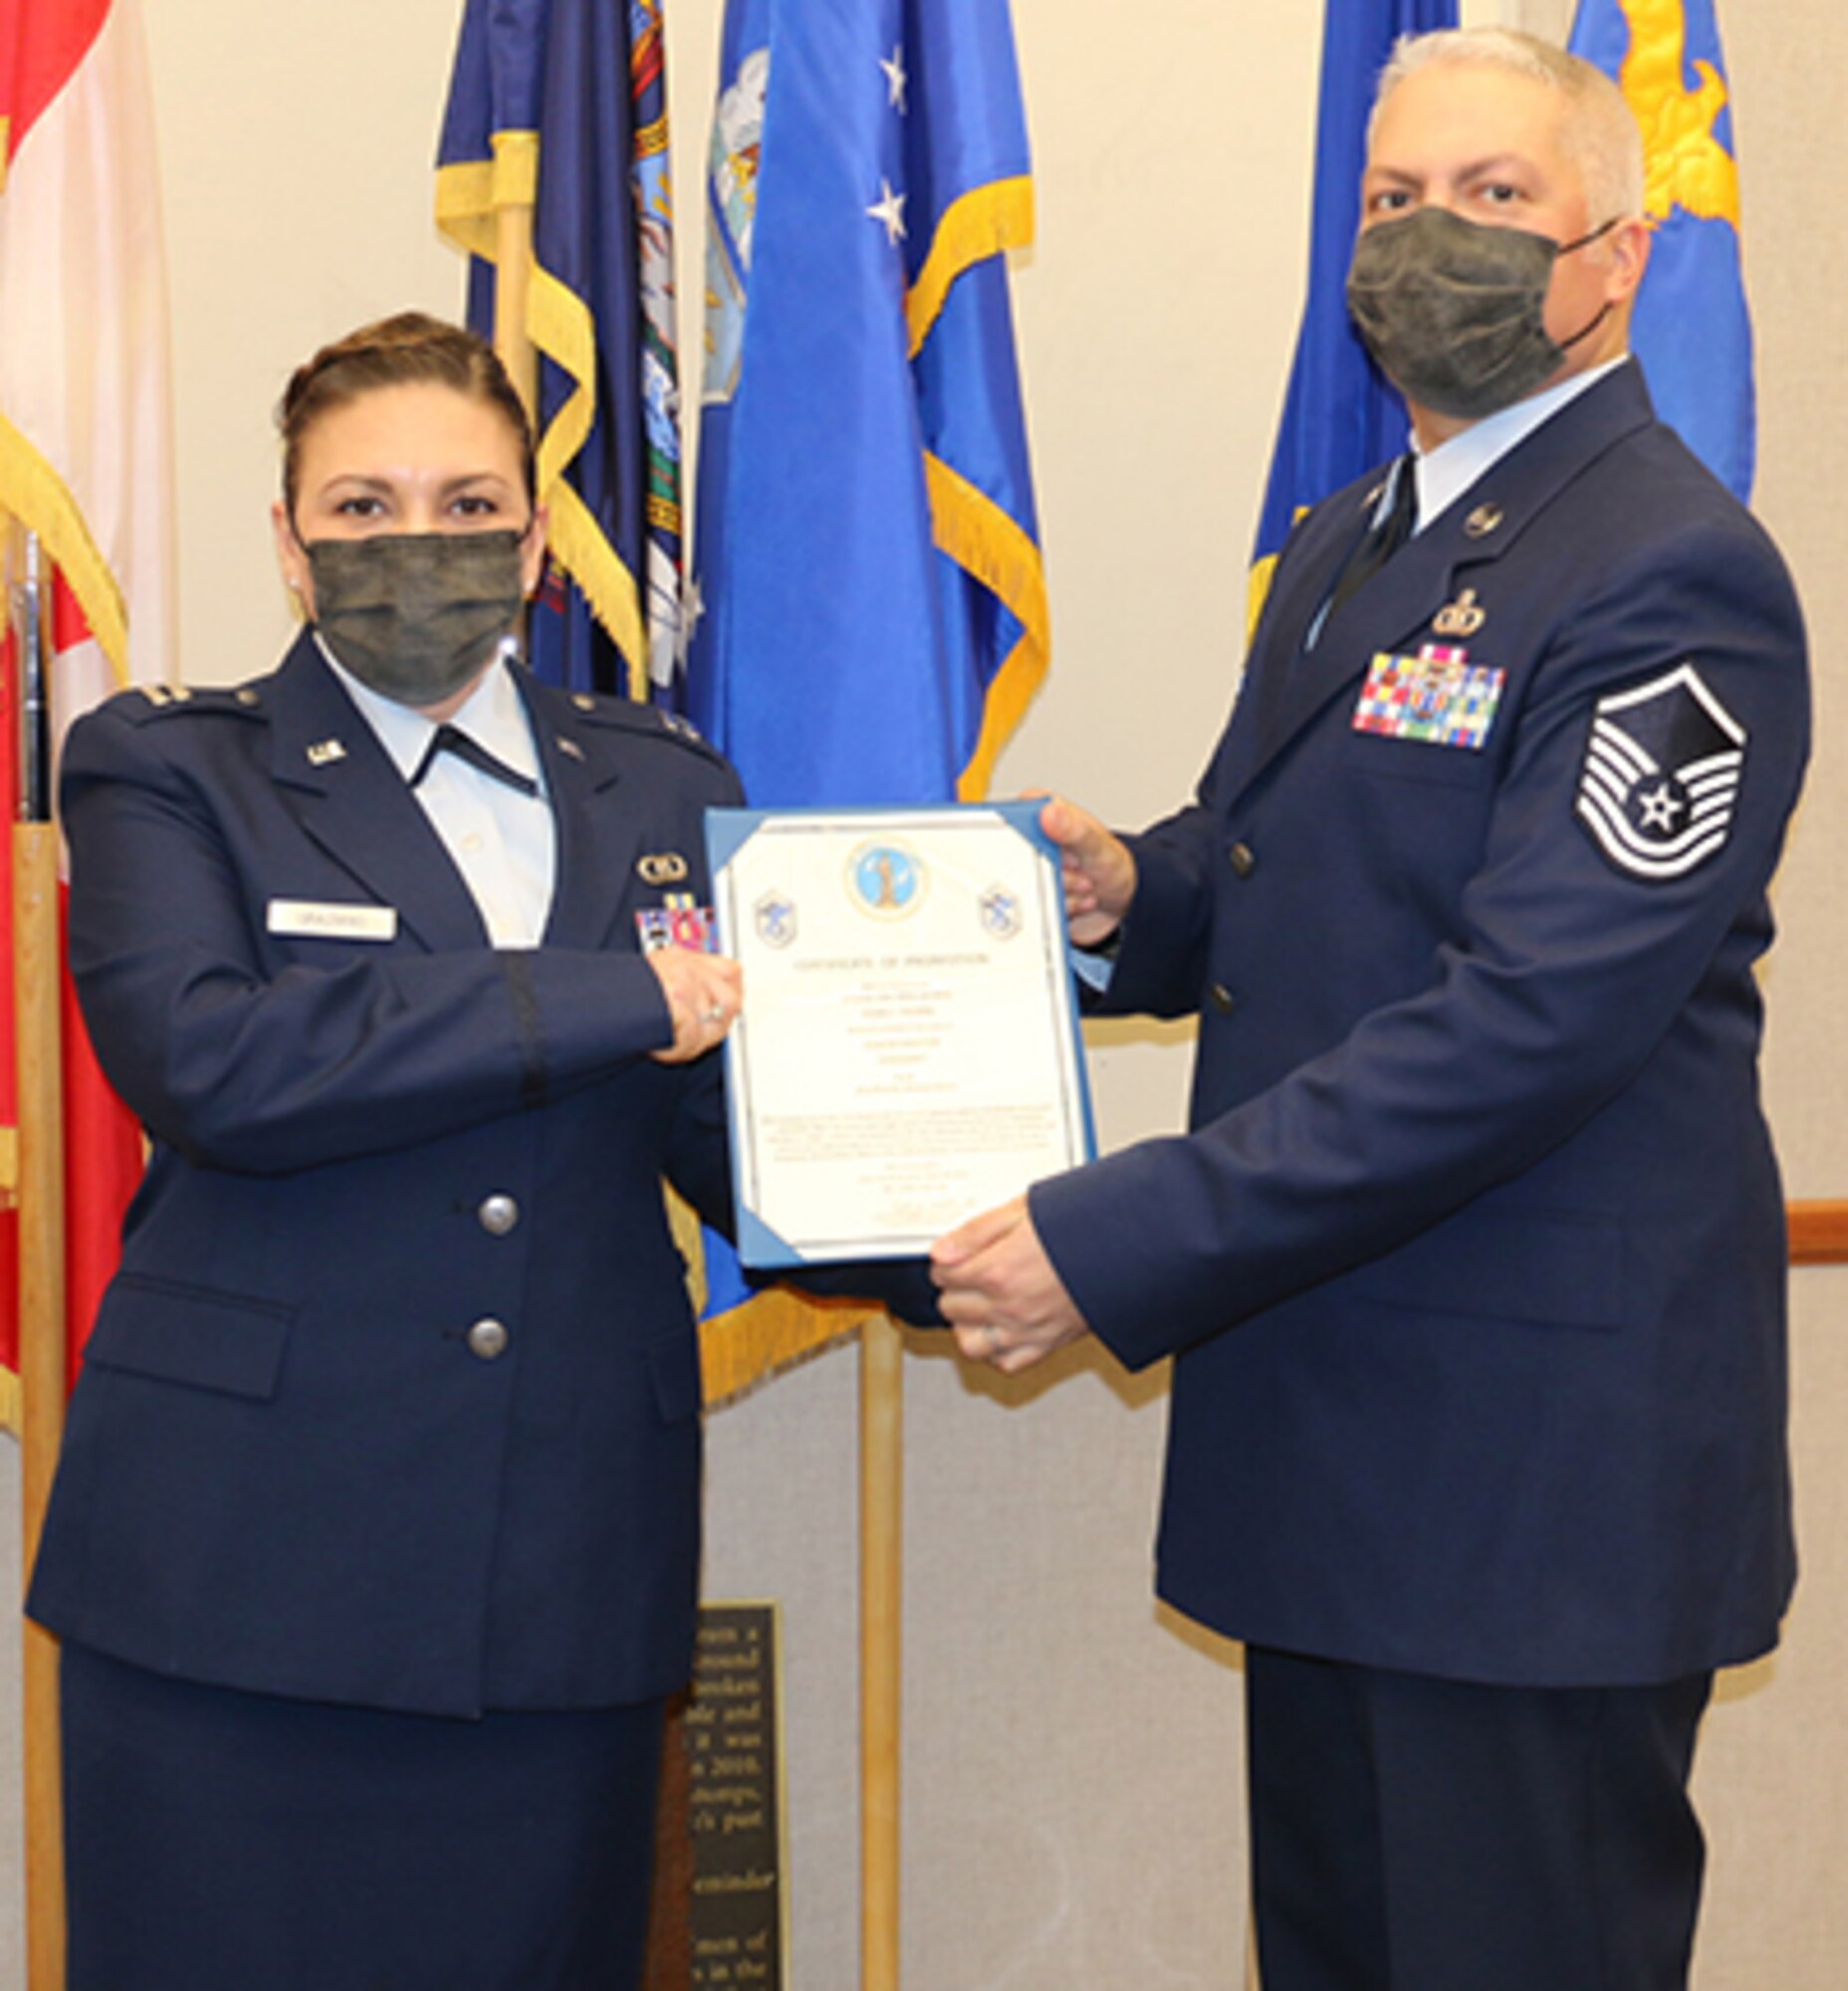 Thorn promoted to senior master sergeant